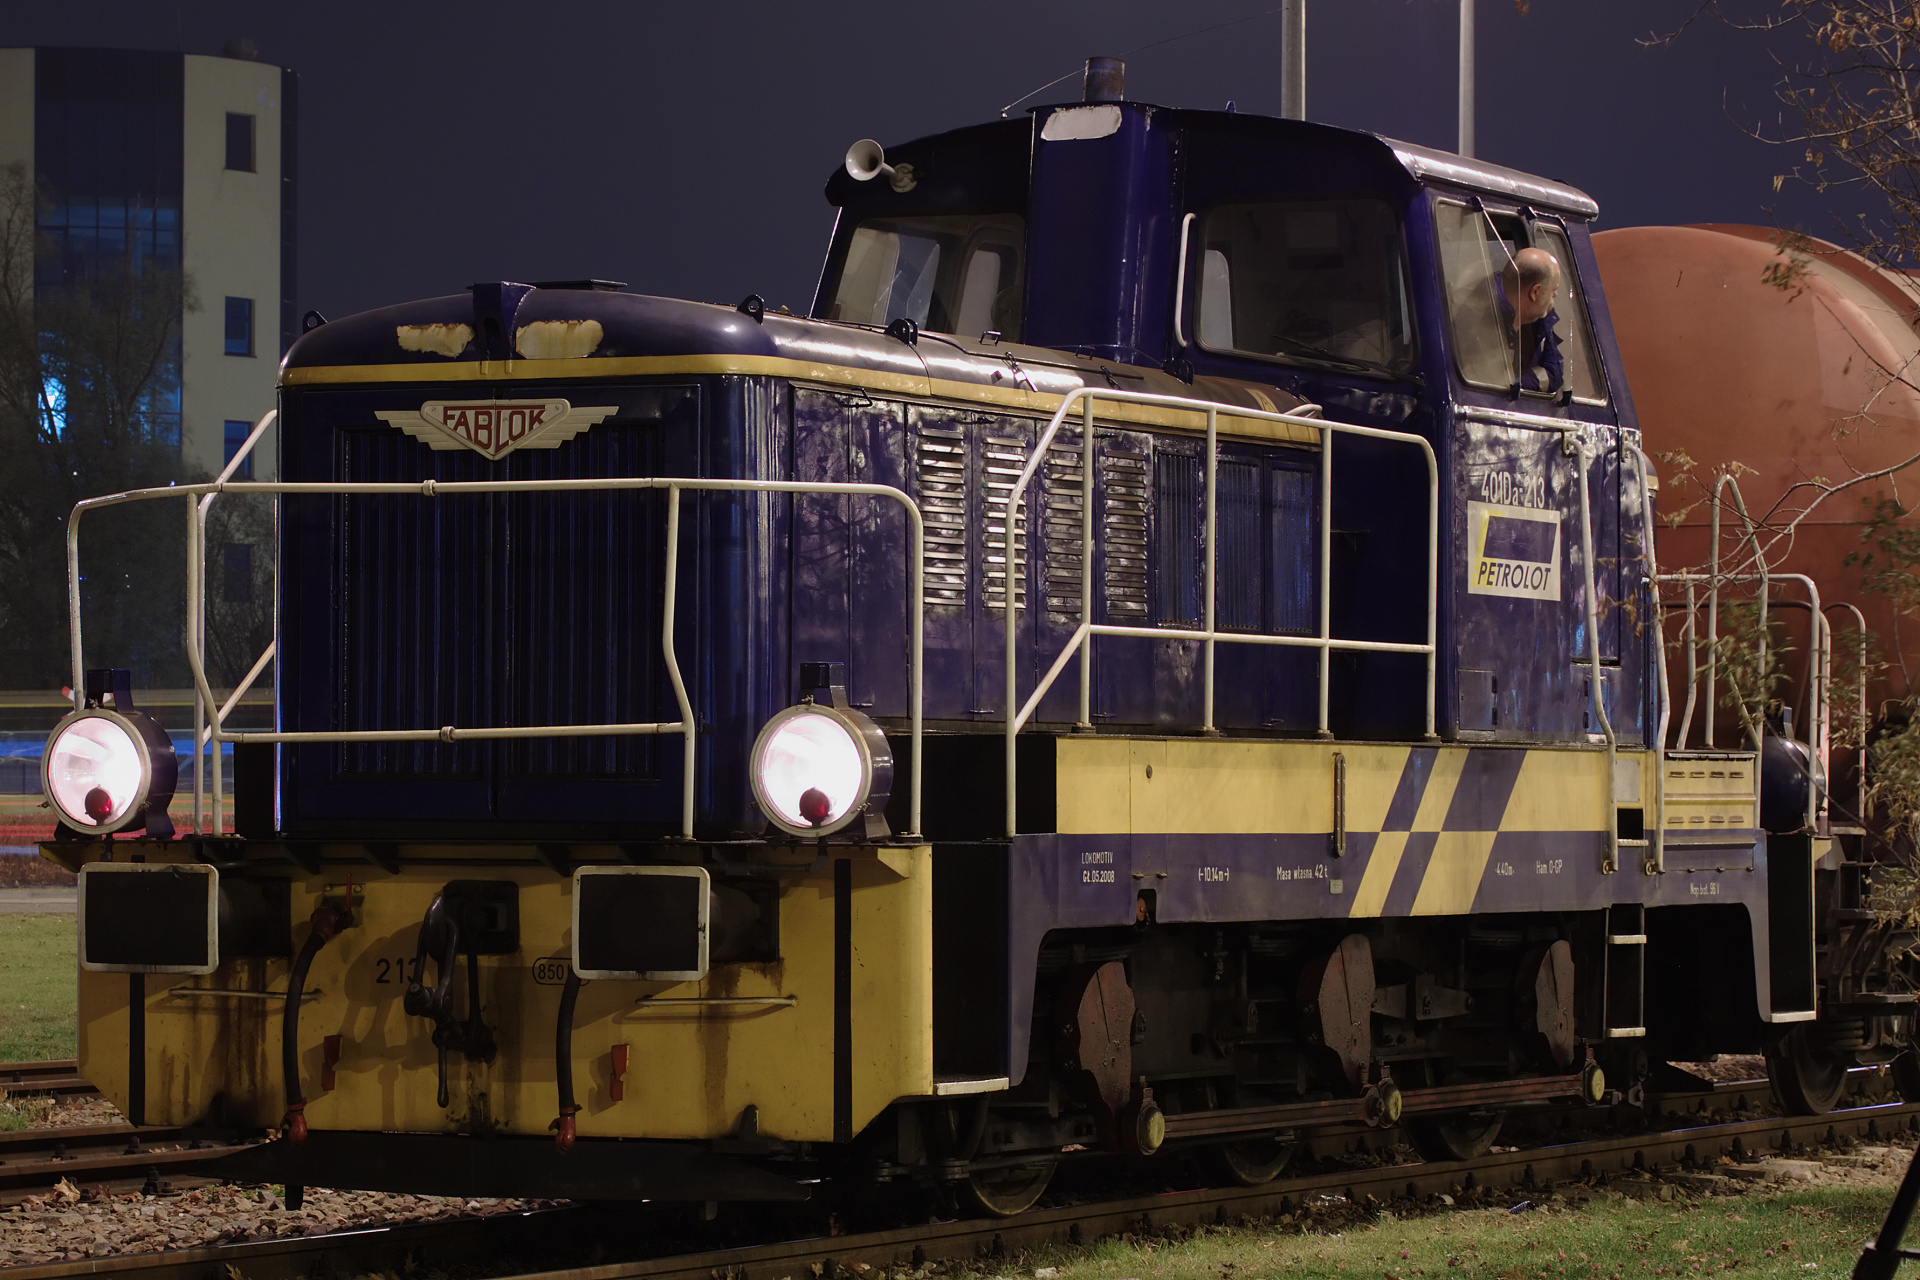 Fablok 401Da-213 (Vehicles » Trains and Locomotives)